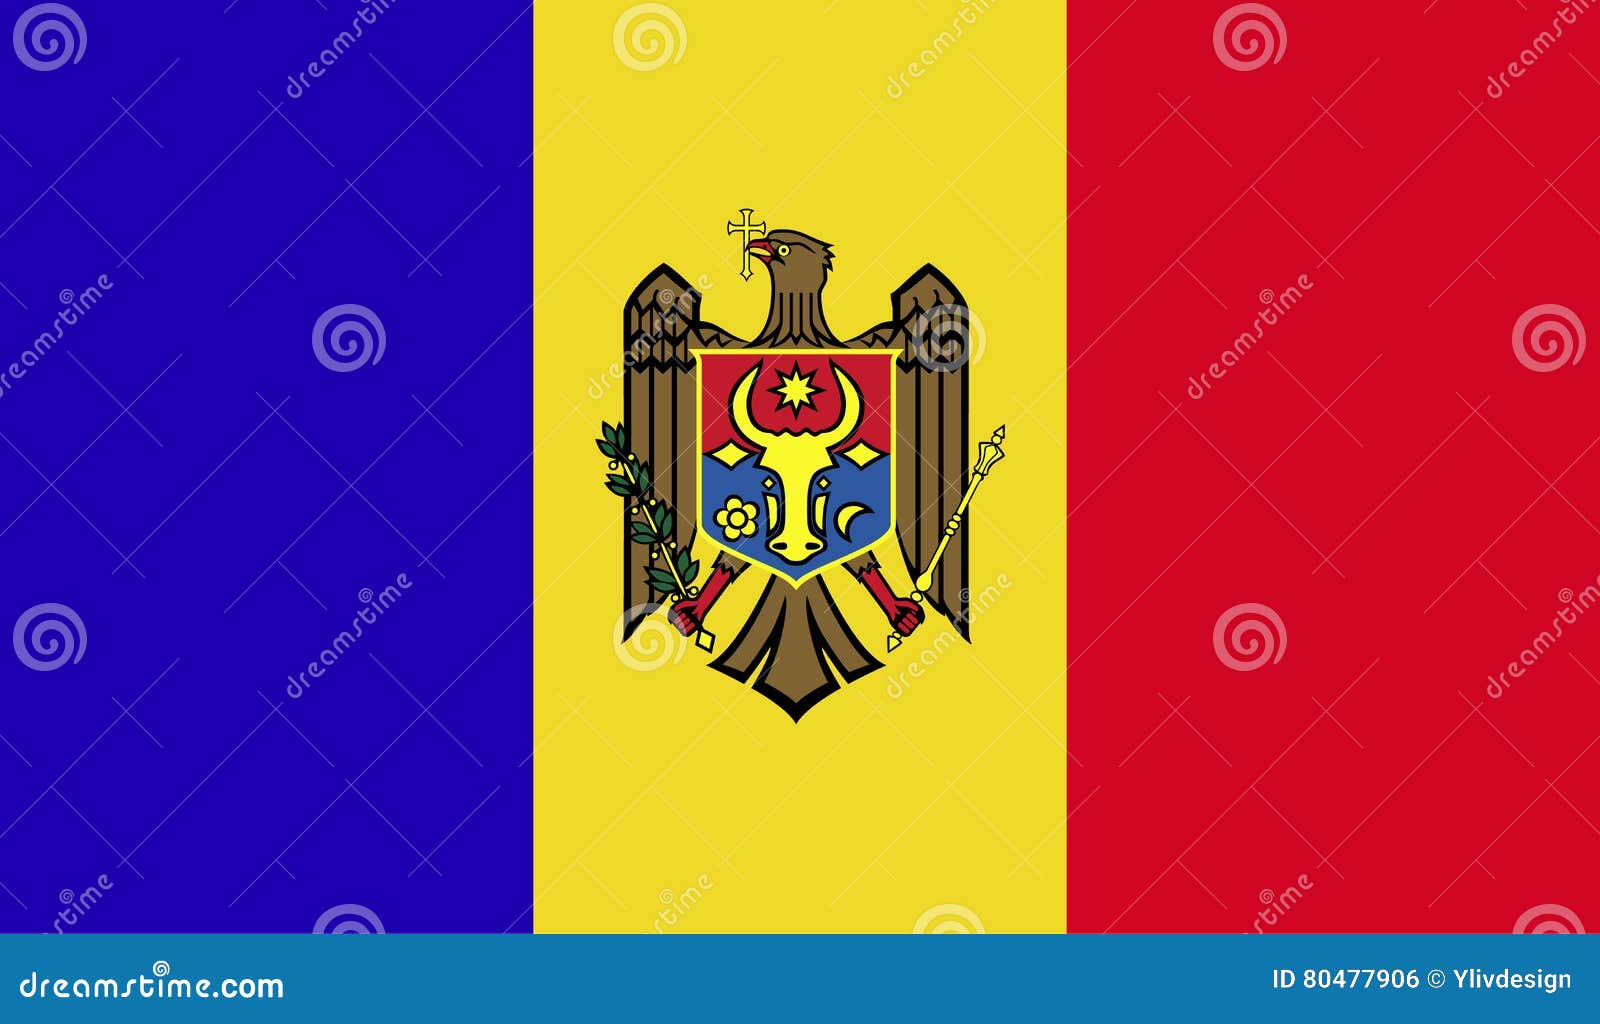 moldova flag image